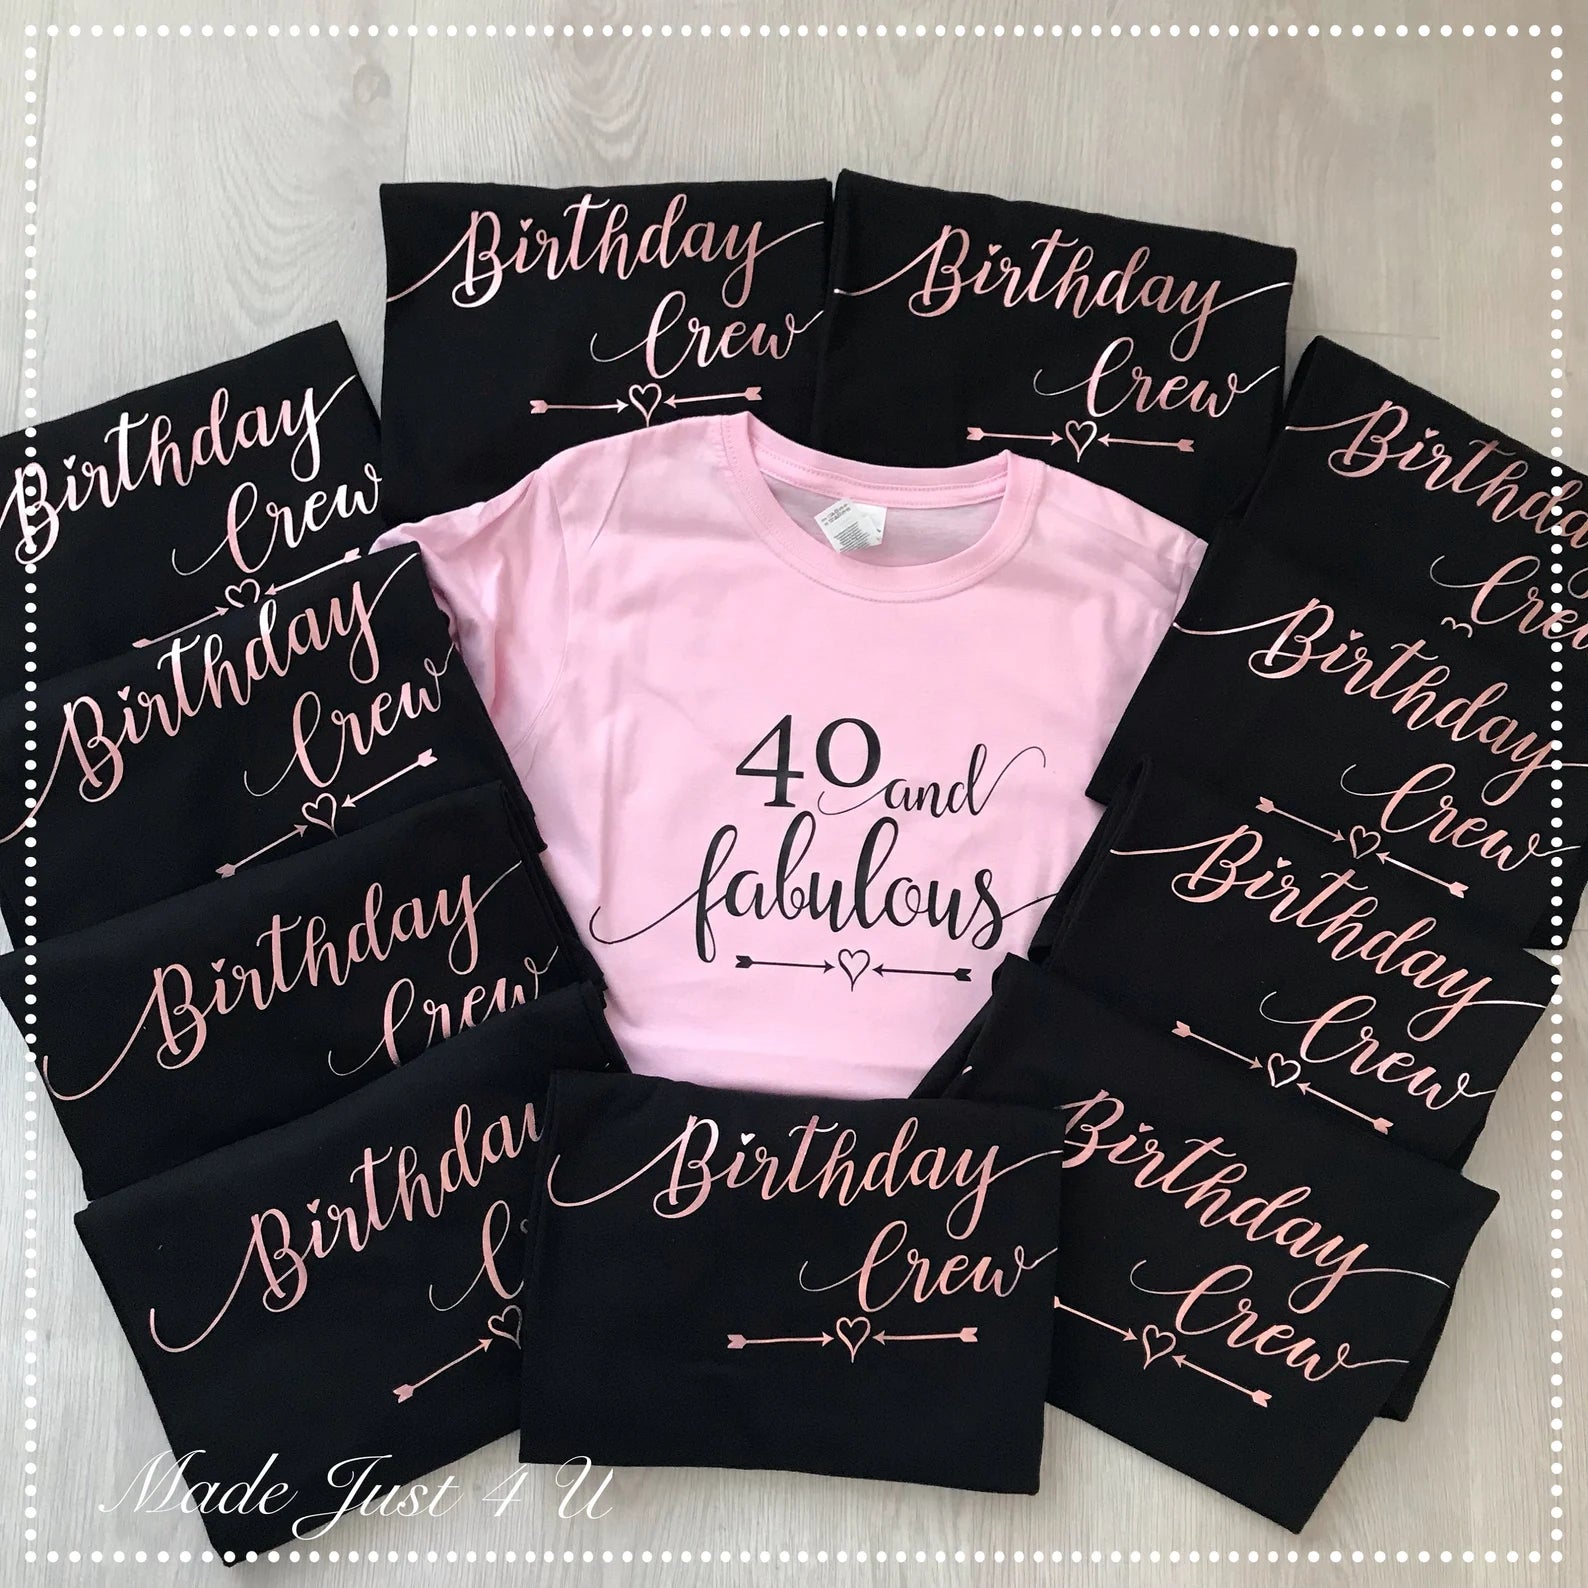 Birthday Crew Shirts, Birthday Queen Shirt, Birthday Party Shirts, 21st Birthday Shirt, 30th Birthday Shirt, 40th Birthday Shirt – Made Just 4 U